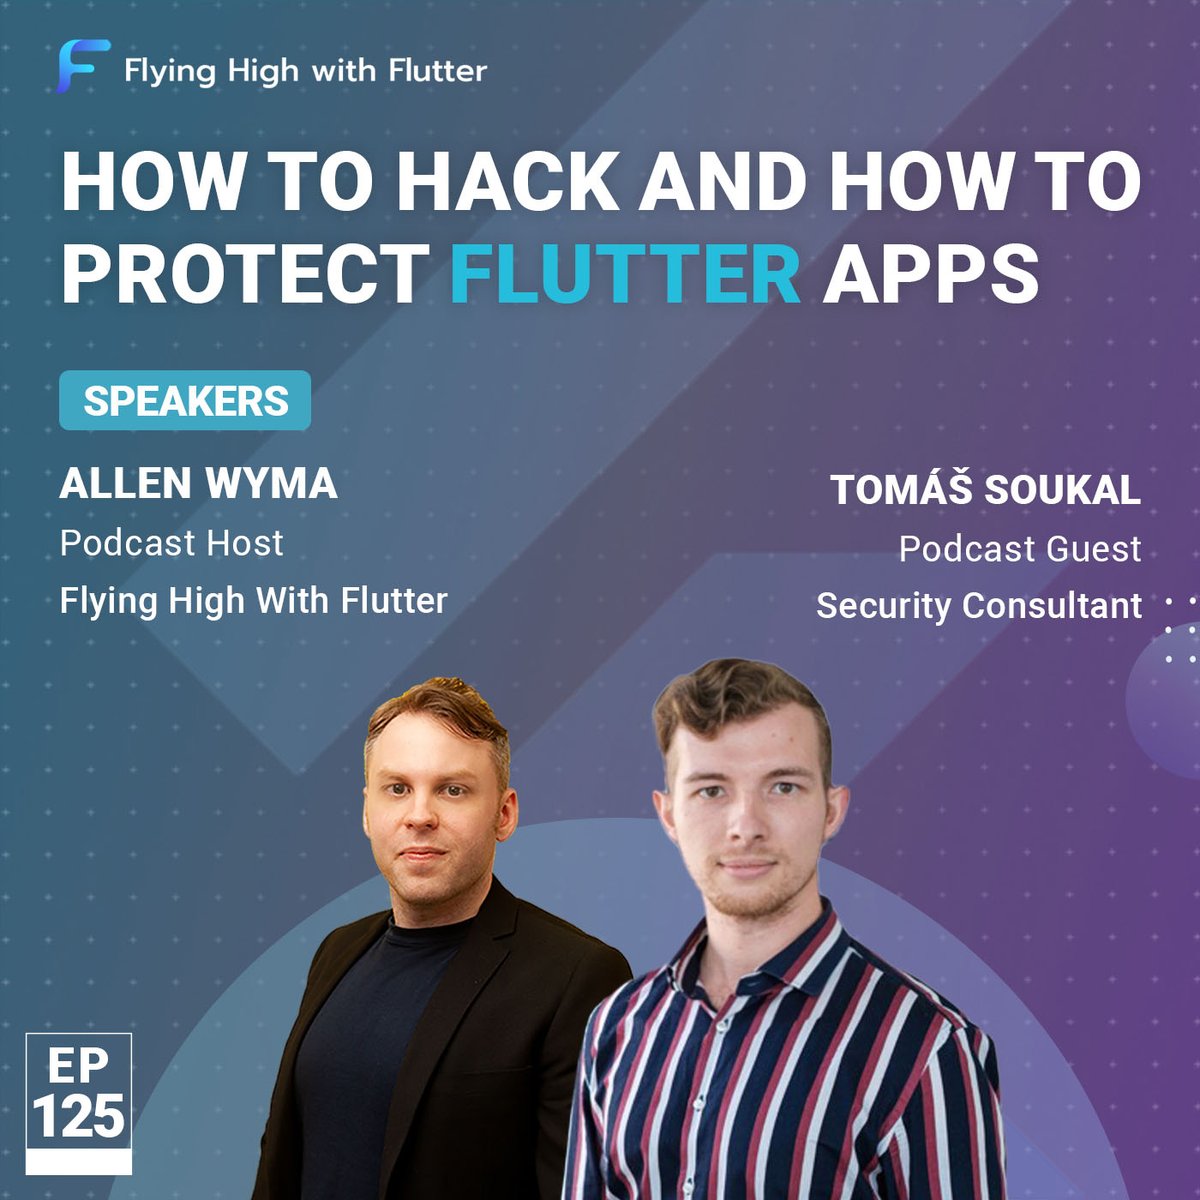 #flyinghighwithflutter Tomáš Soukal @SirionRazzer shared with us about hacking and protecting Flutter apps on #podcast show with @allenwyma Watch episode: youtu.be/GAyMKdU_zLc #flutterdev #dart #dartlang #fluttercommunity #fhwf #flutter #appsecurity #FlutterTips